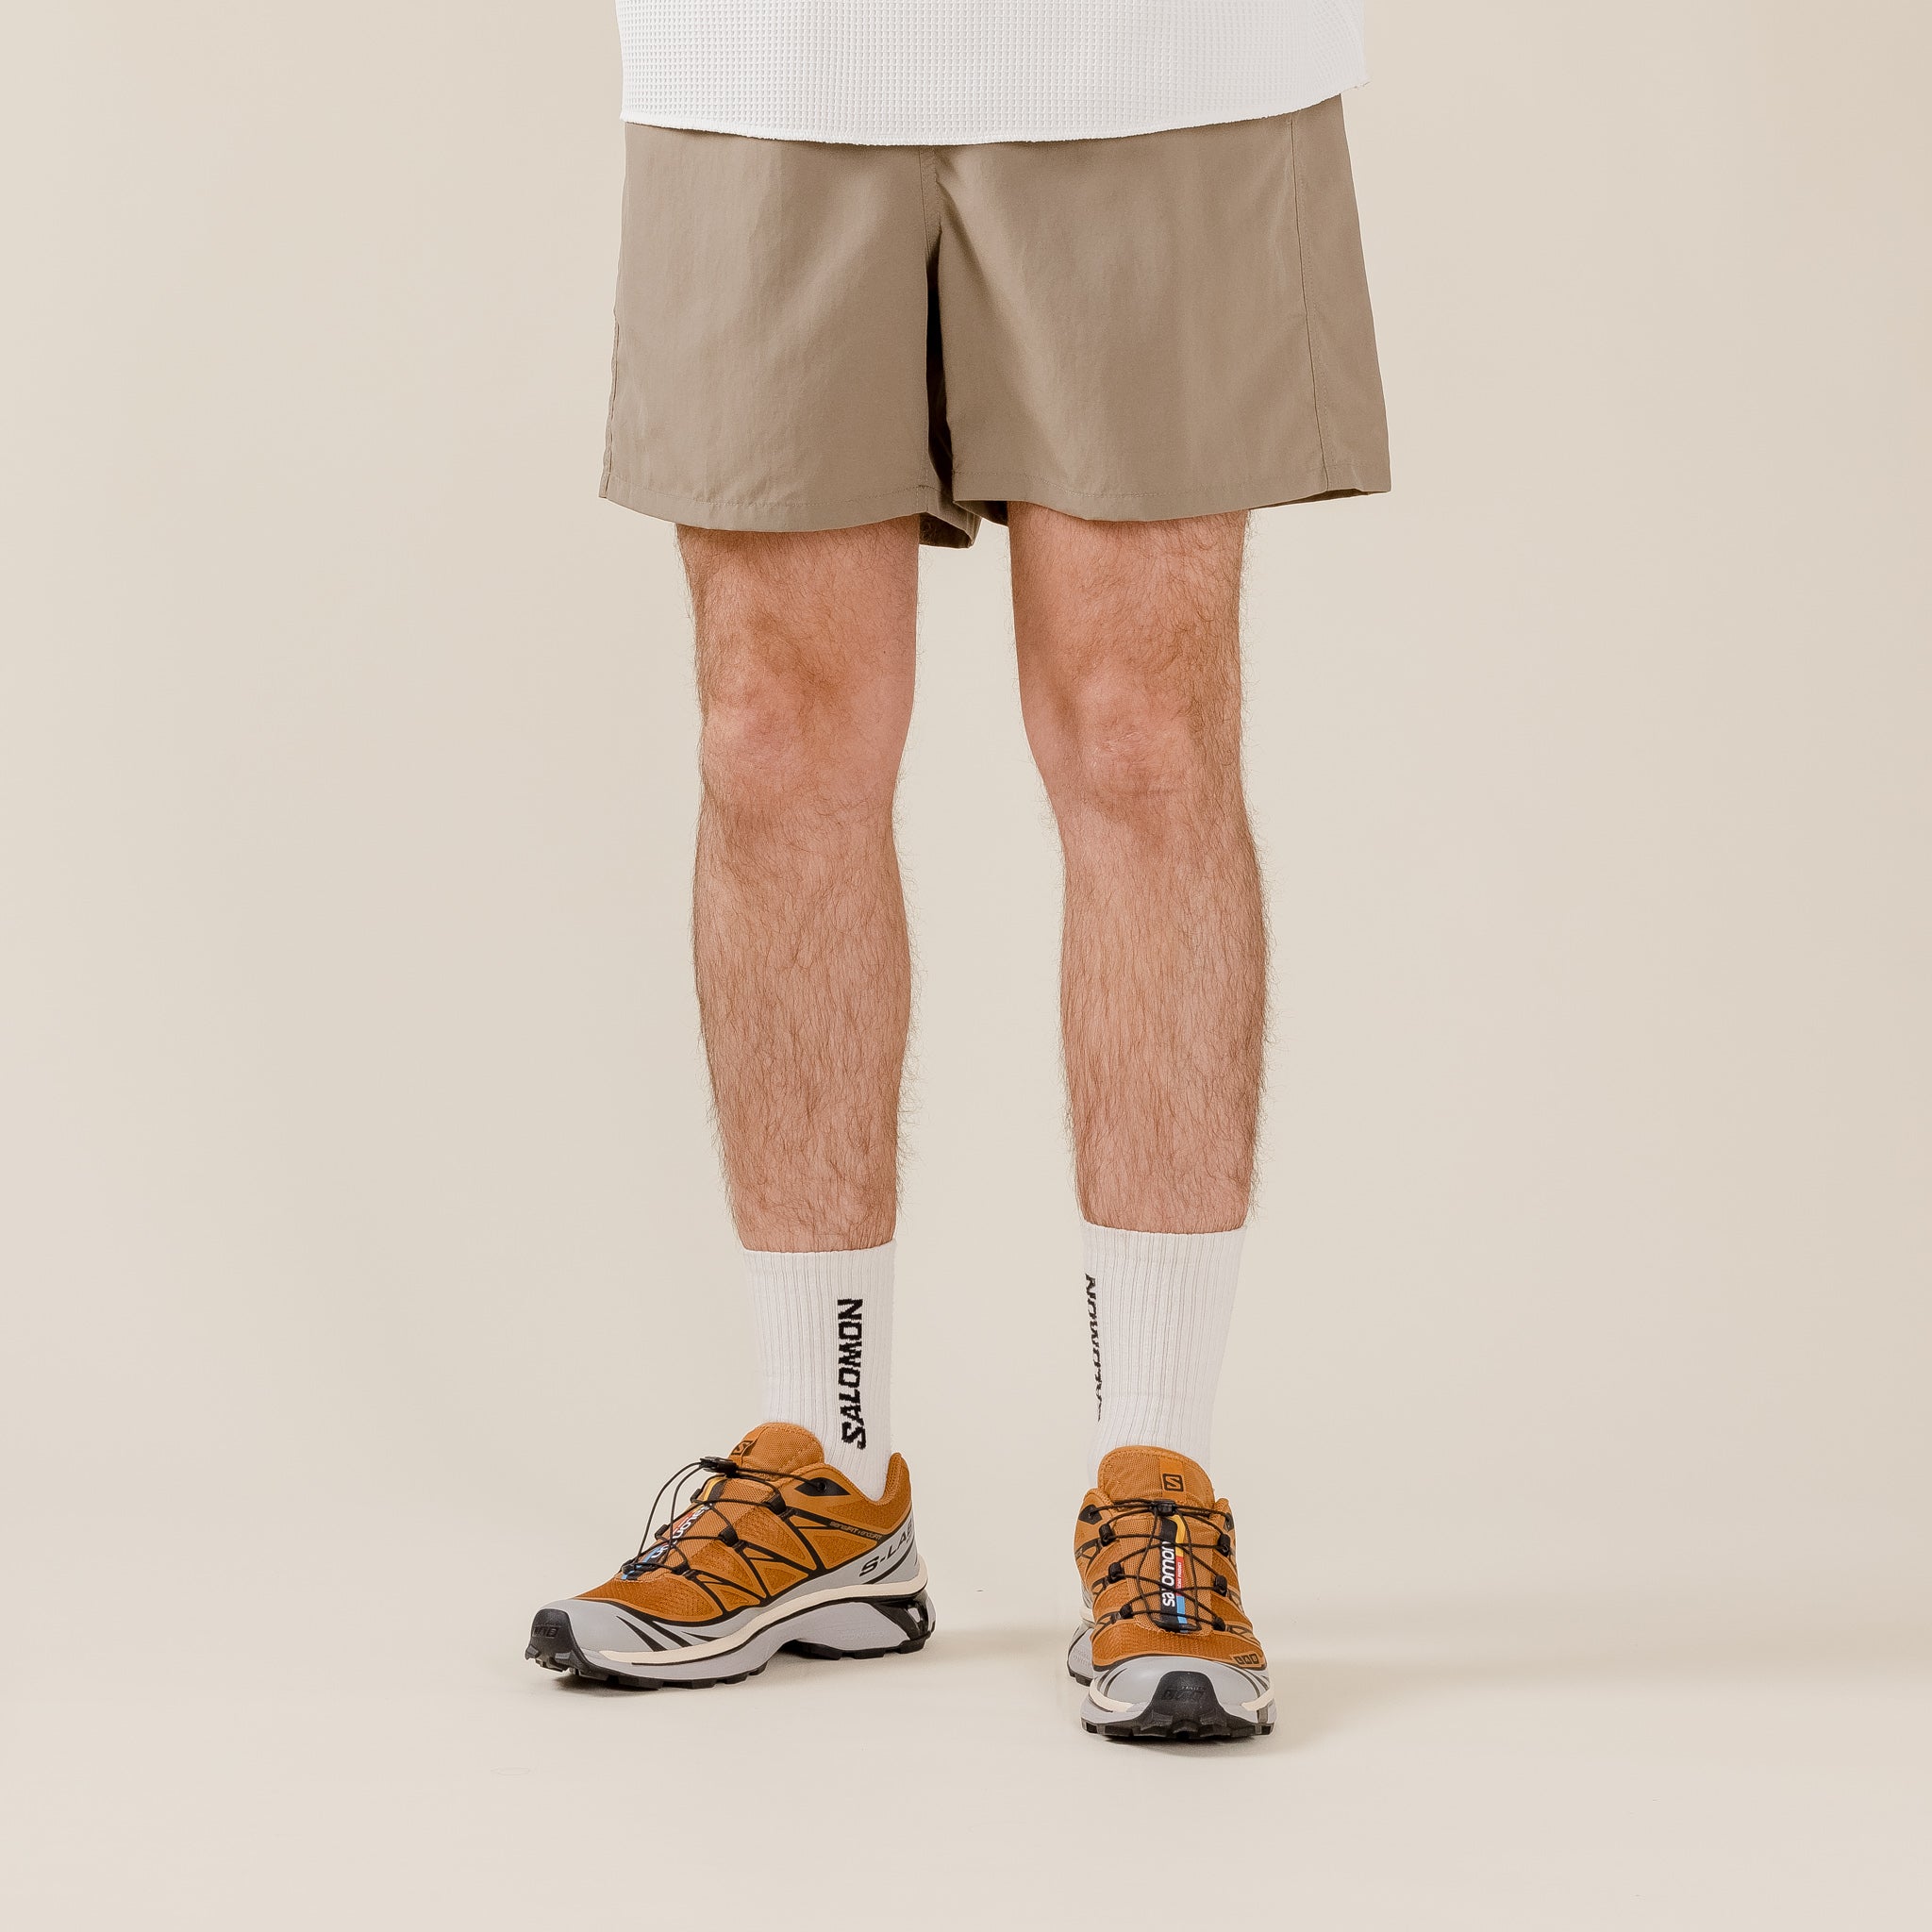 Goldwin - Nylon Shorts 5 - Desert Taupe "5" shorts" GM73176 "Goldwin 0" "Goldwin Zero" UK USA Stockist "Goldwin Stockist" Best Price